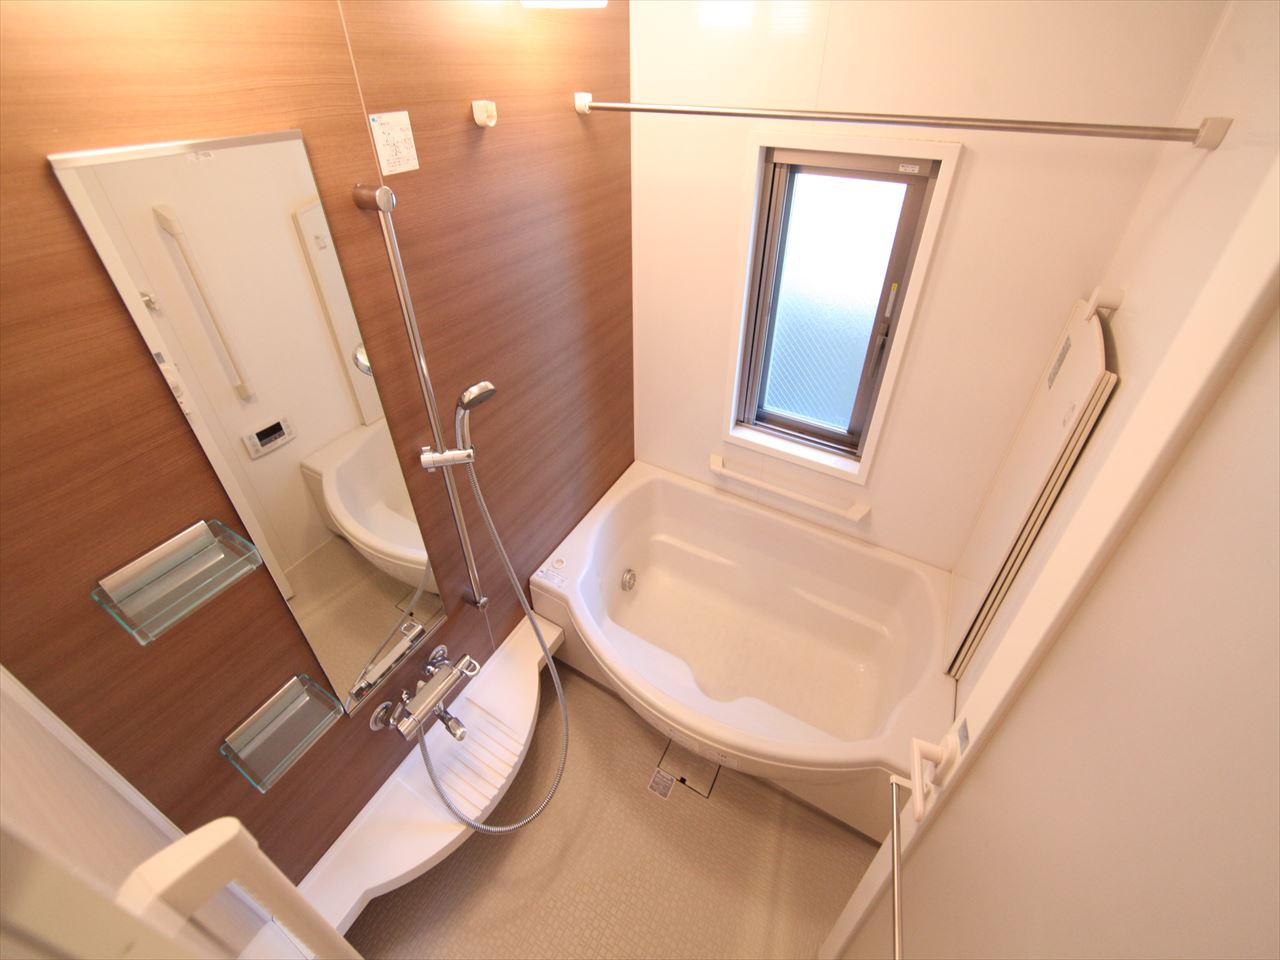 Bath. With reheating Bathroom with heating dryer bath With window